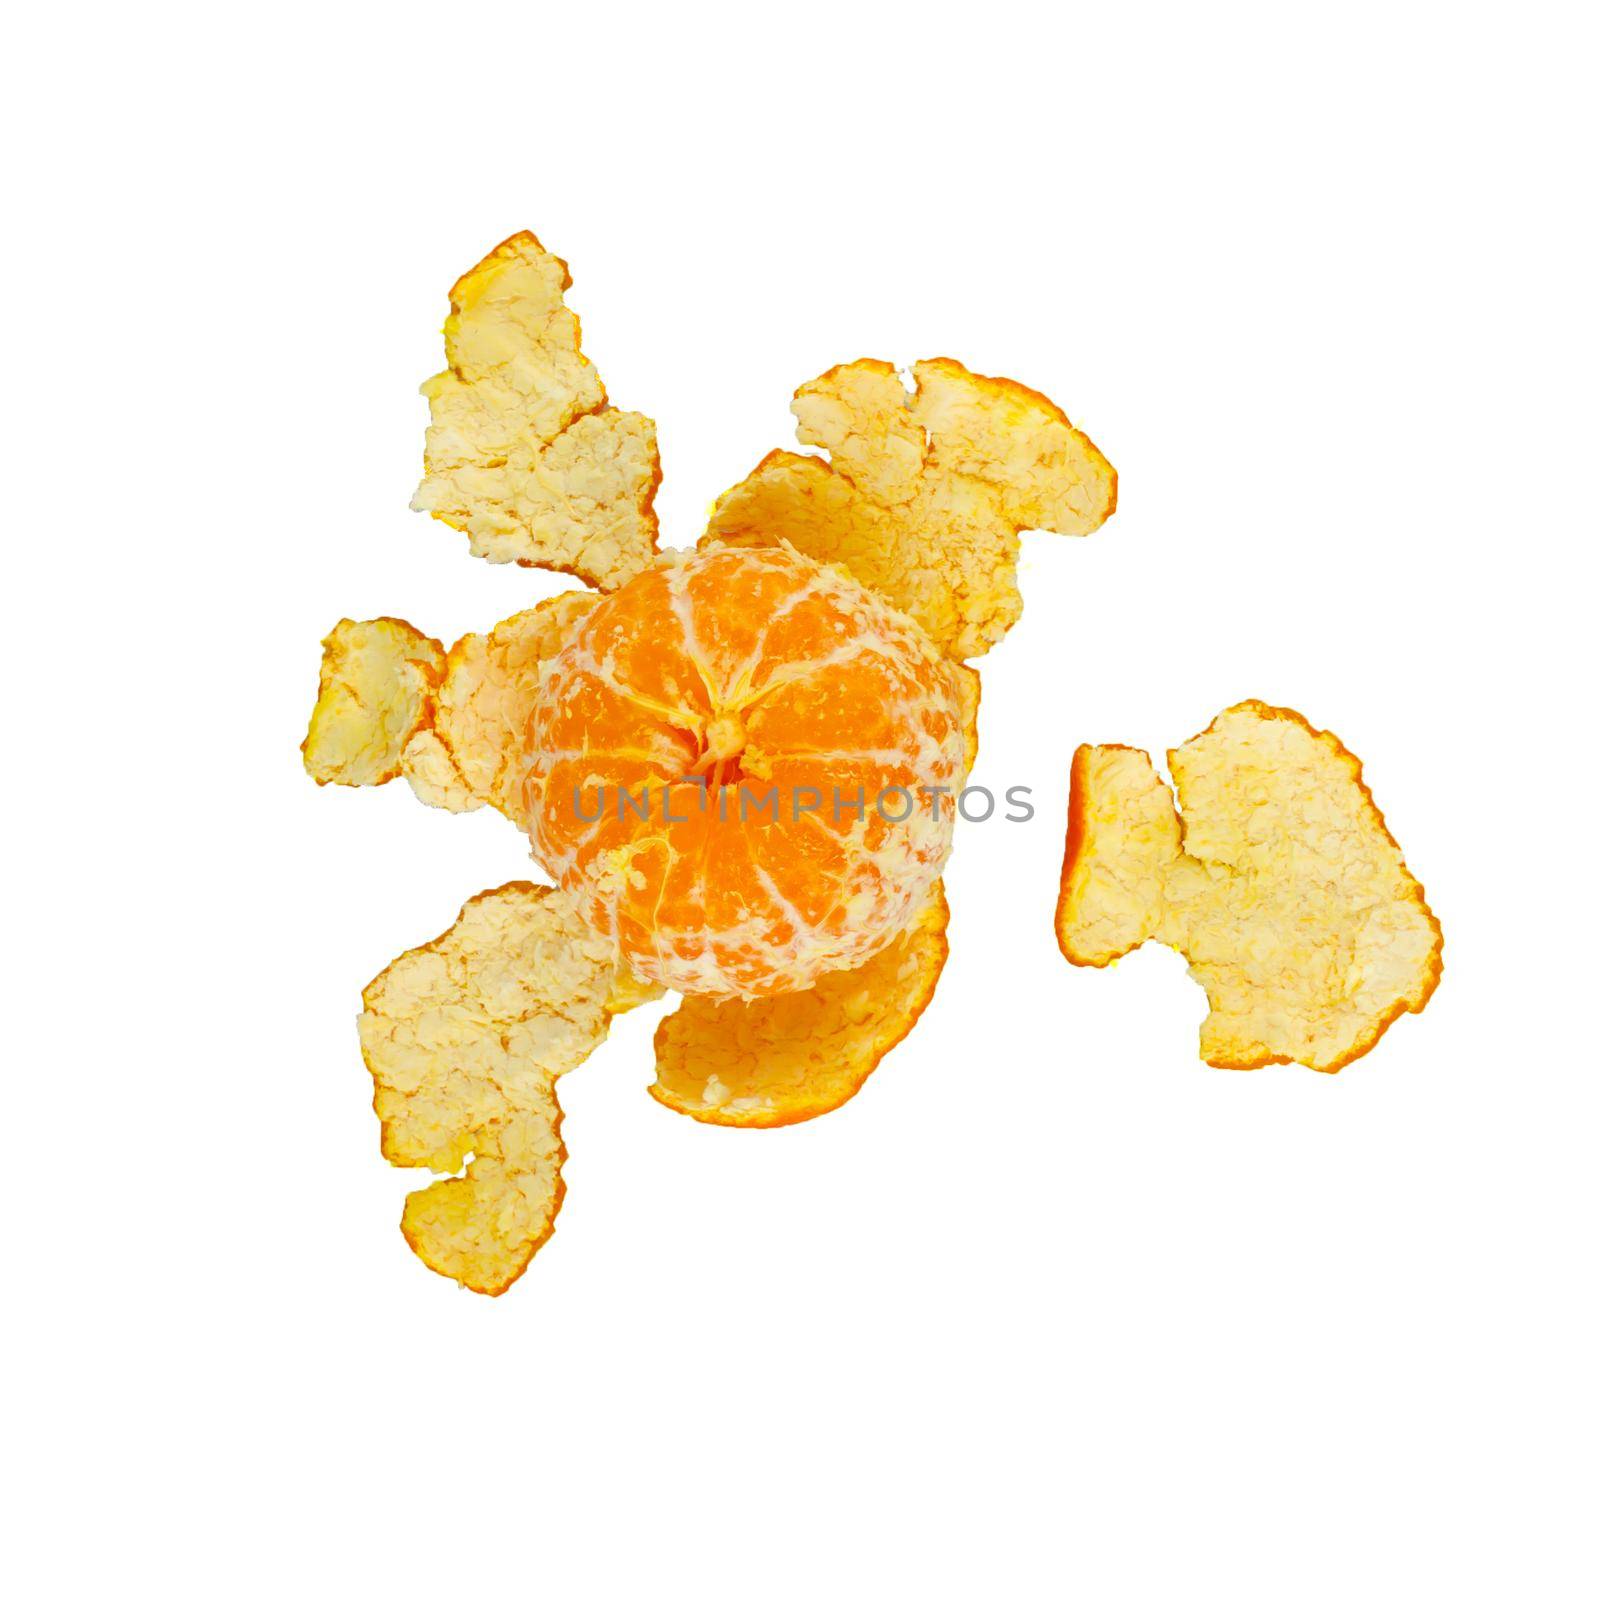 Ripe tangerine, peeled, on a white background isolated